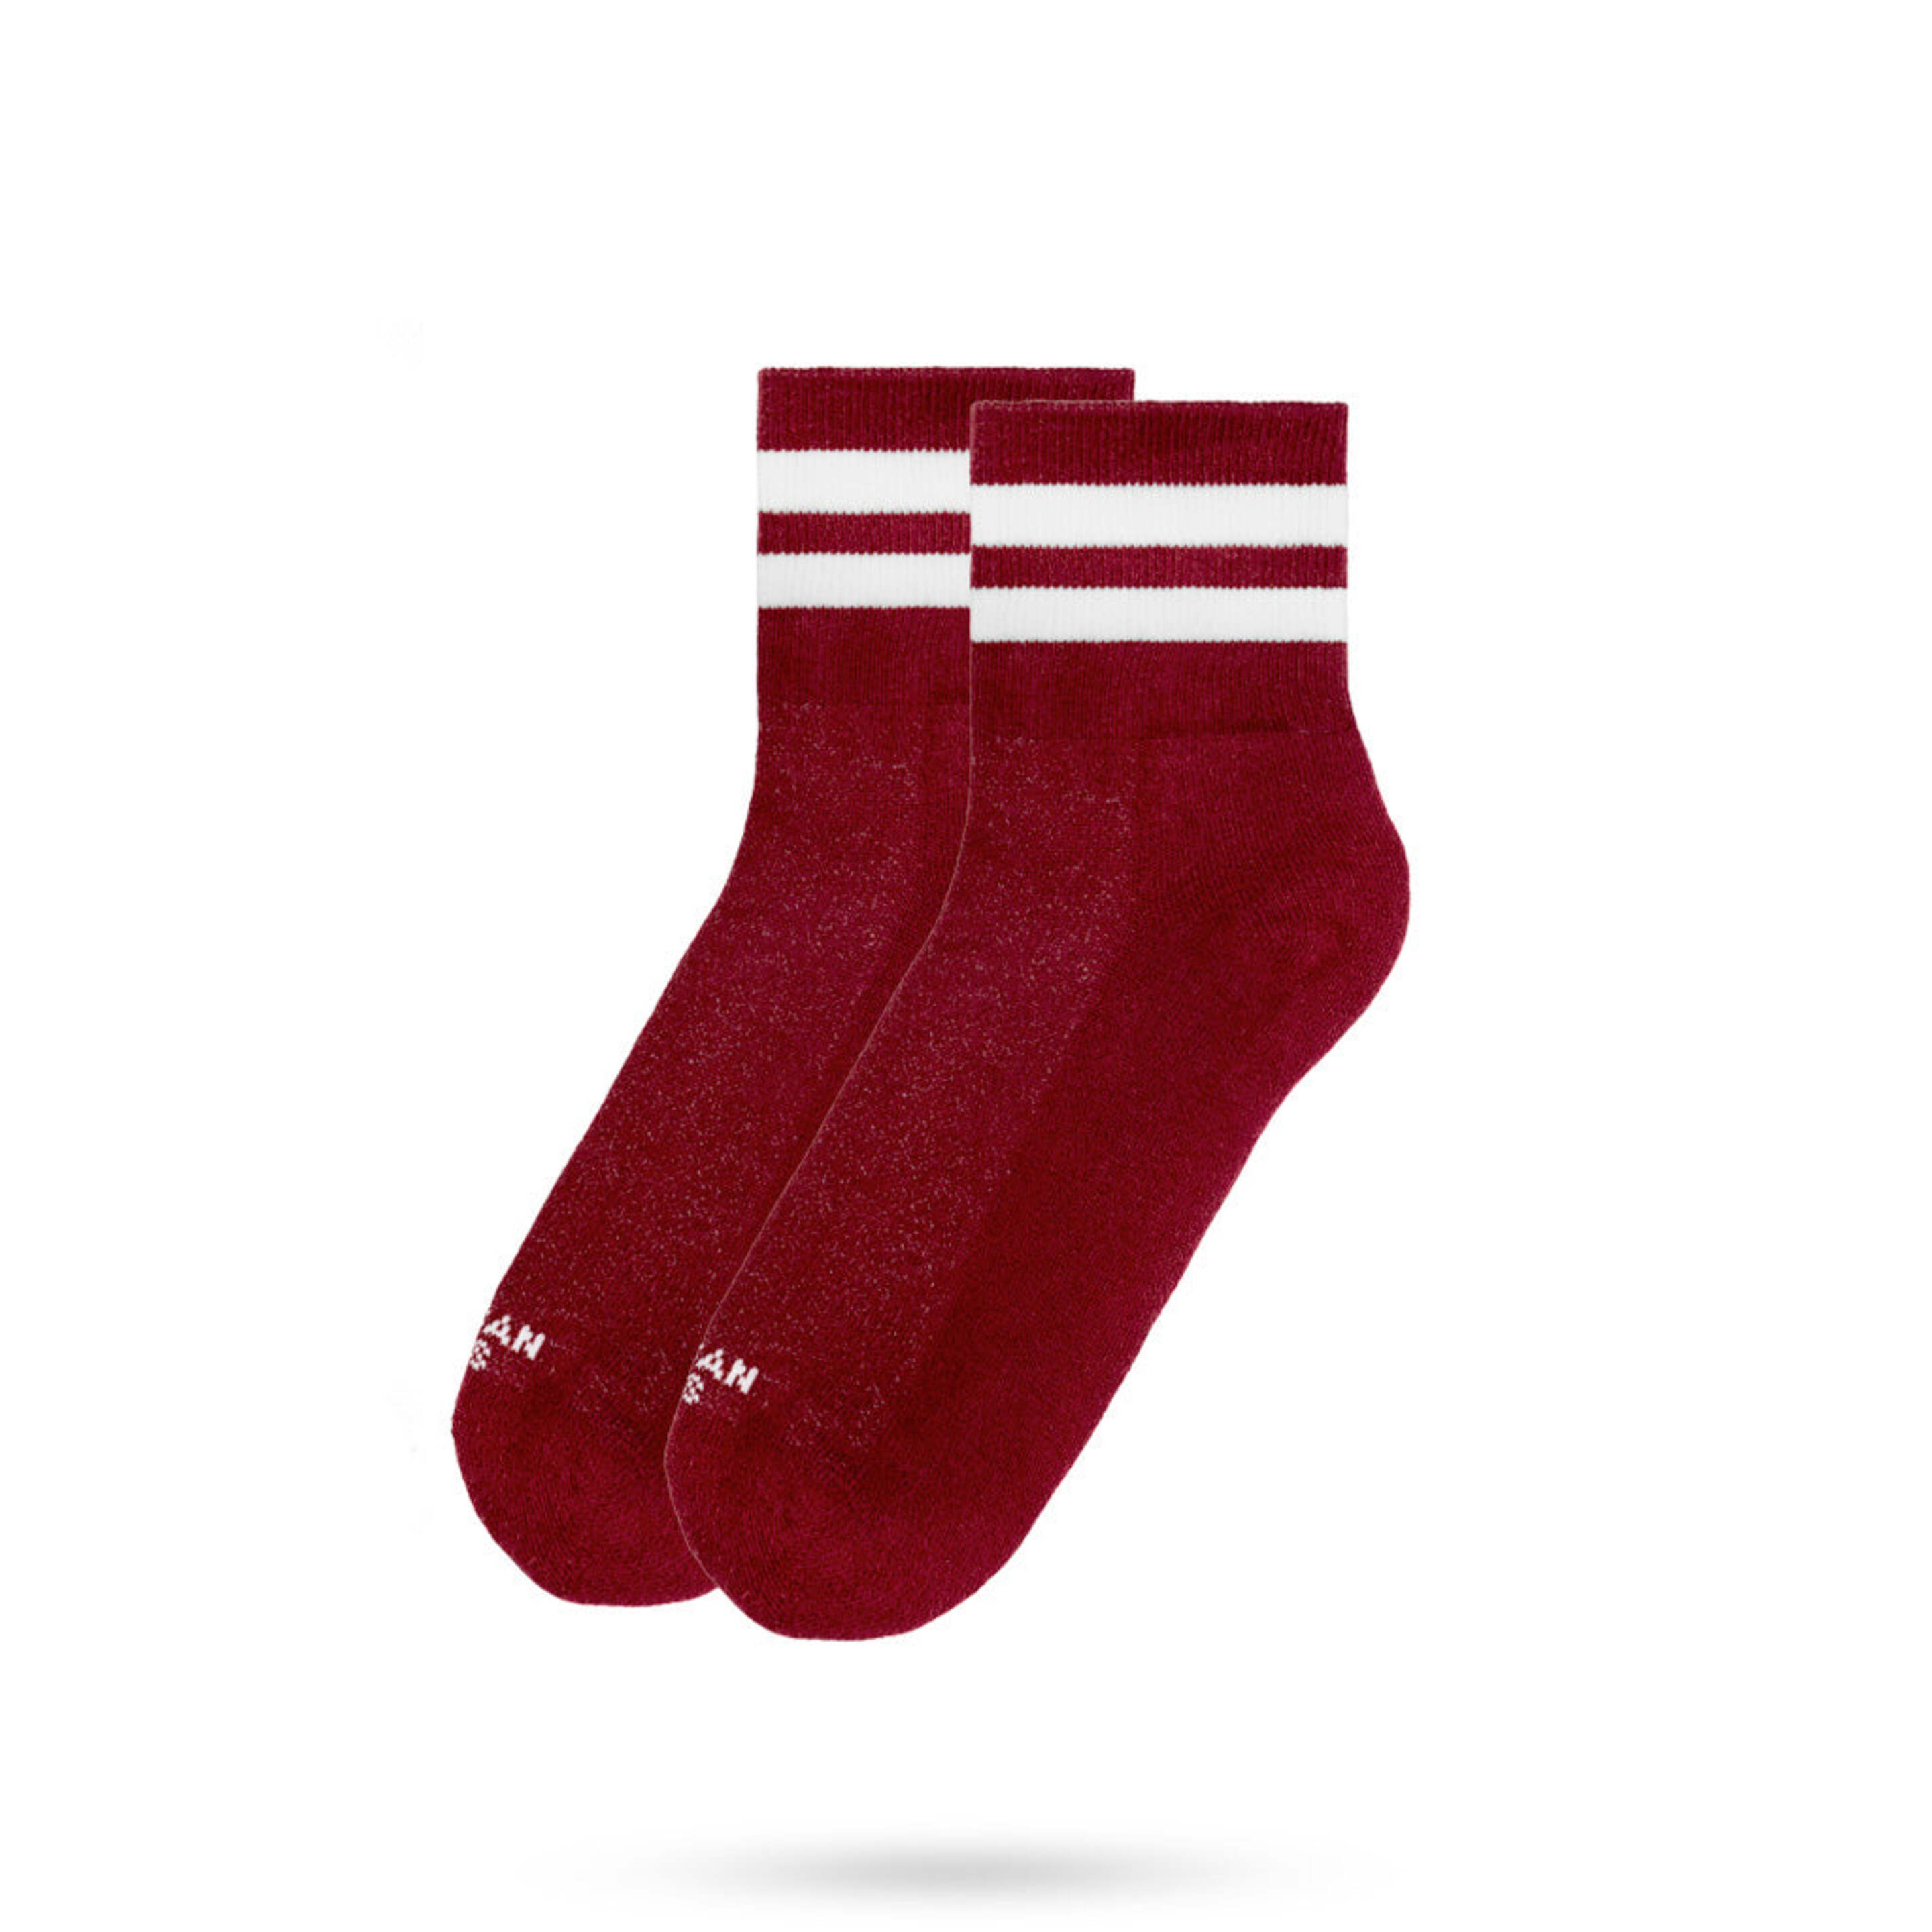 Meias American Socks - Crimson - Ankle High